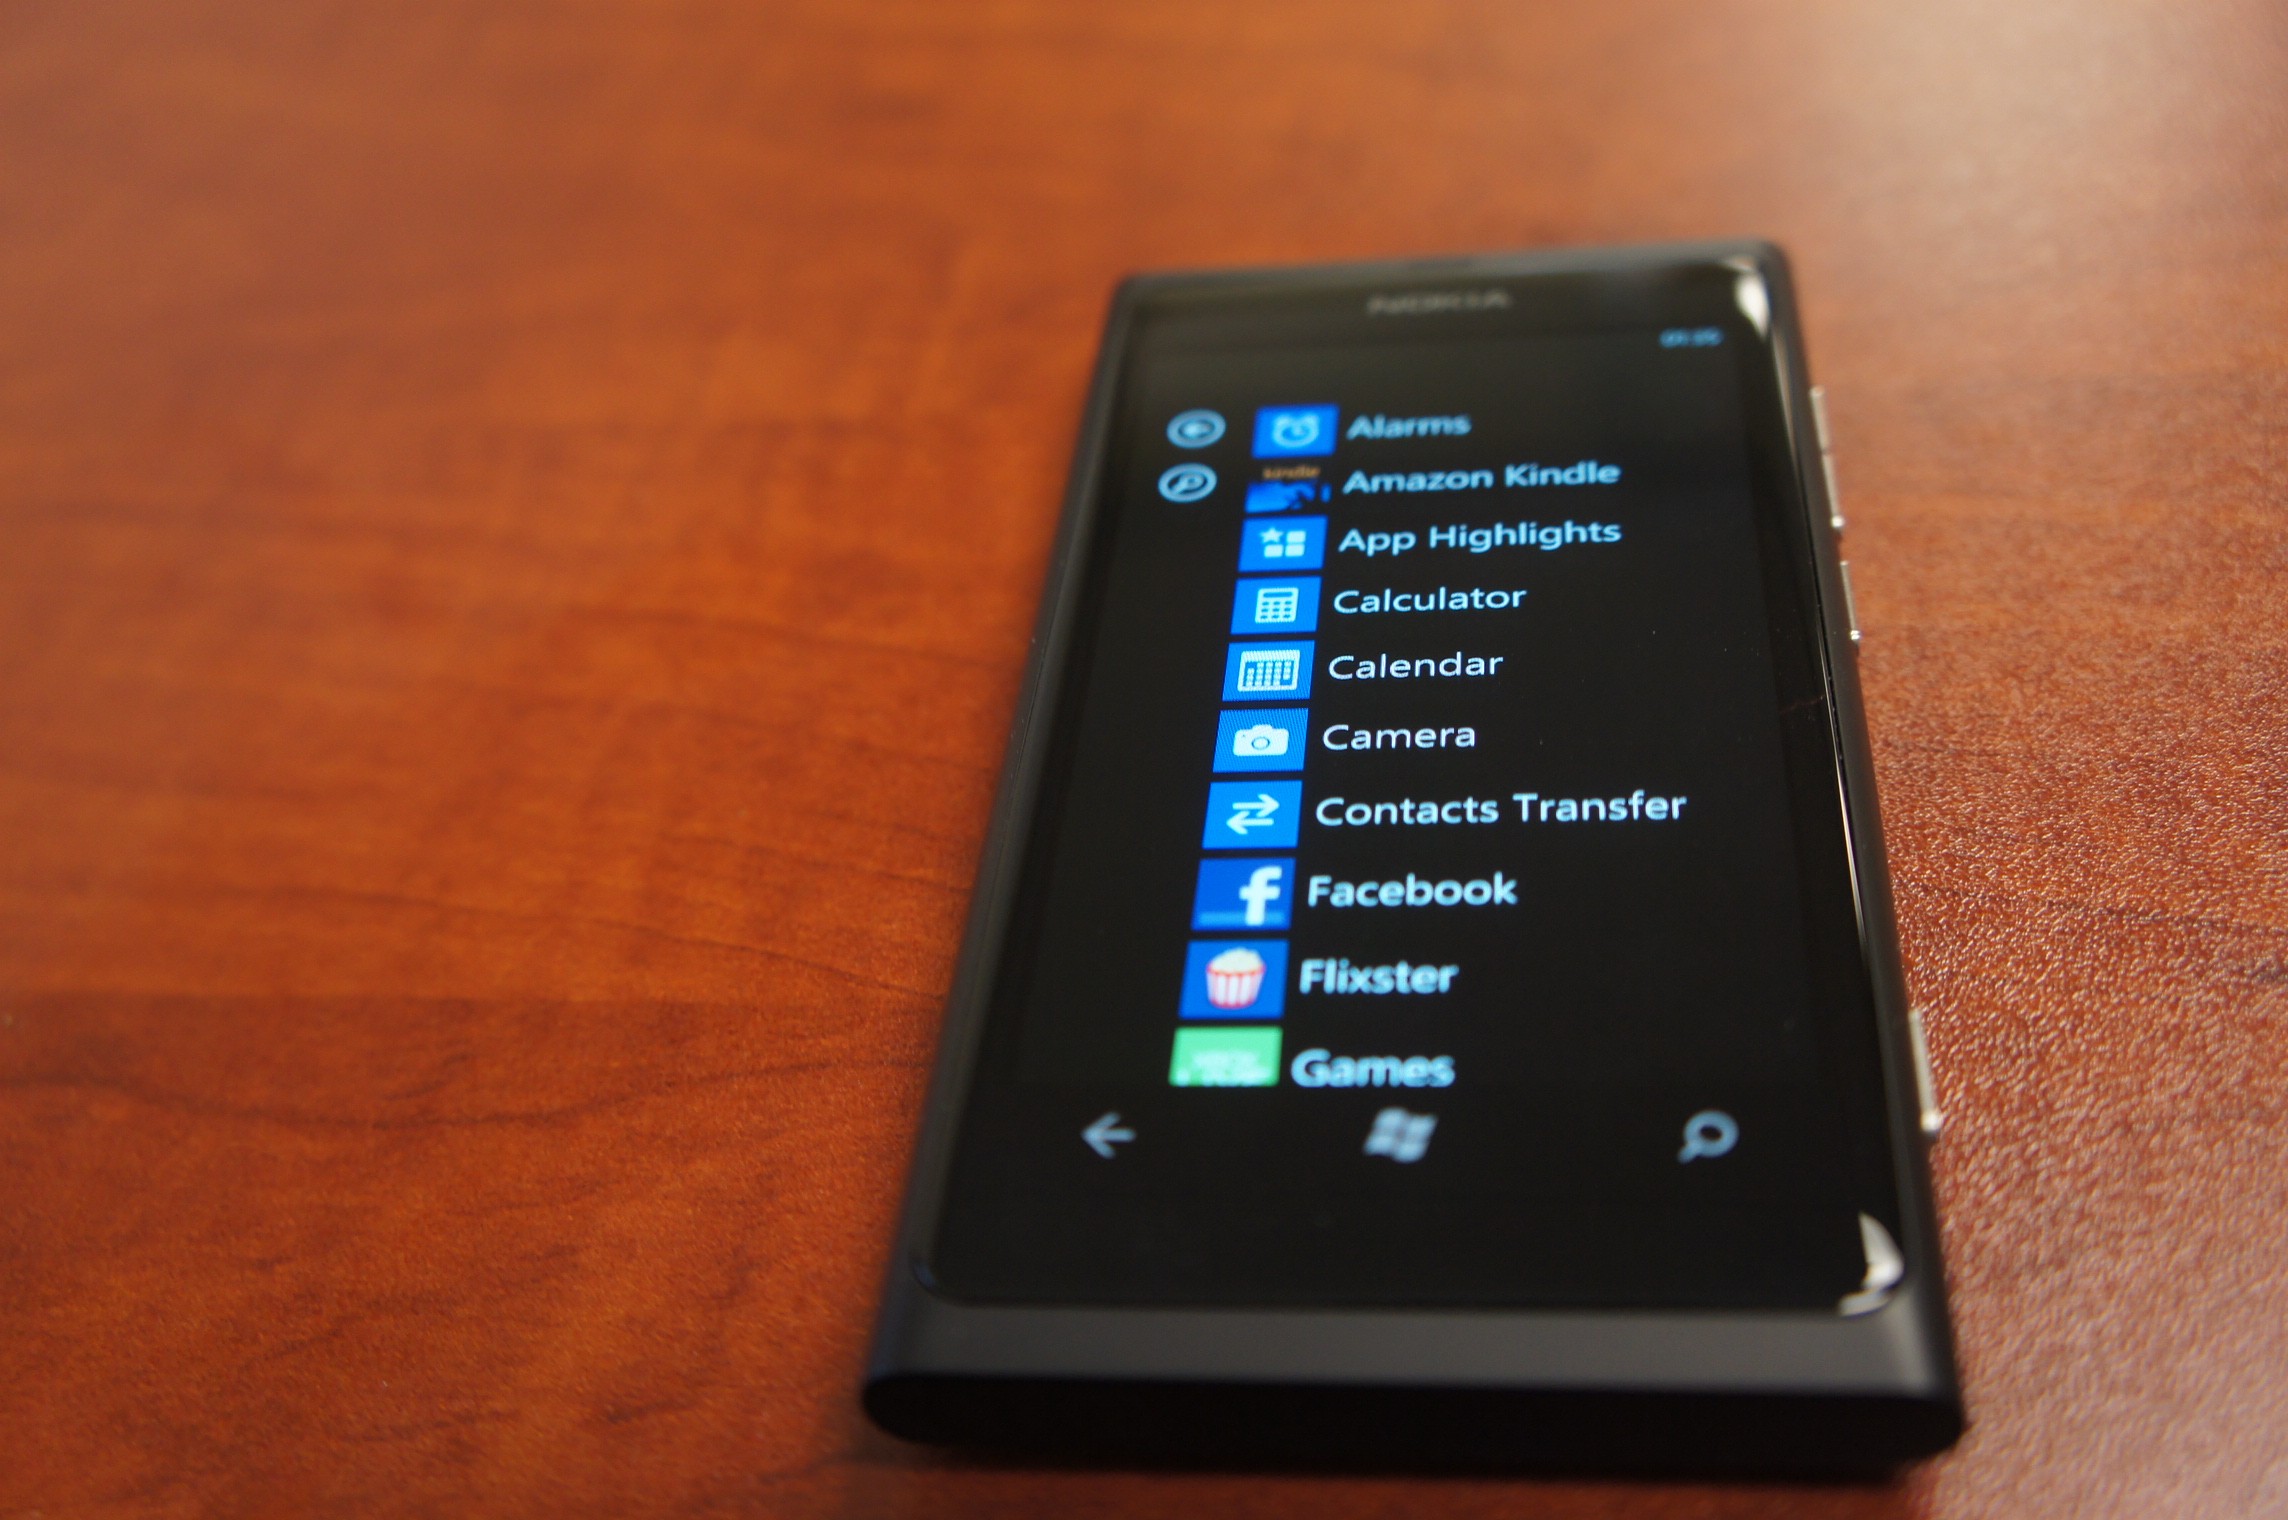 Nokia Lumia 710 620 Power Switch  Apps Directories